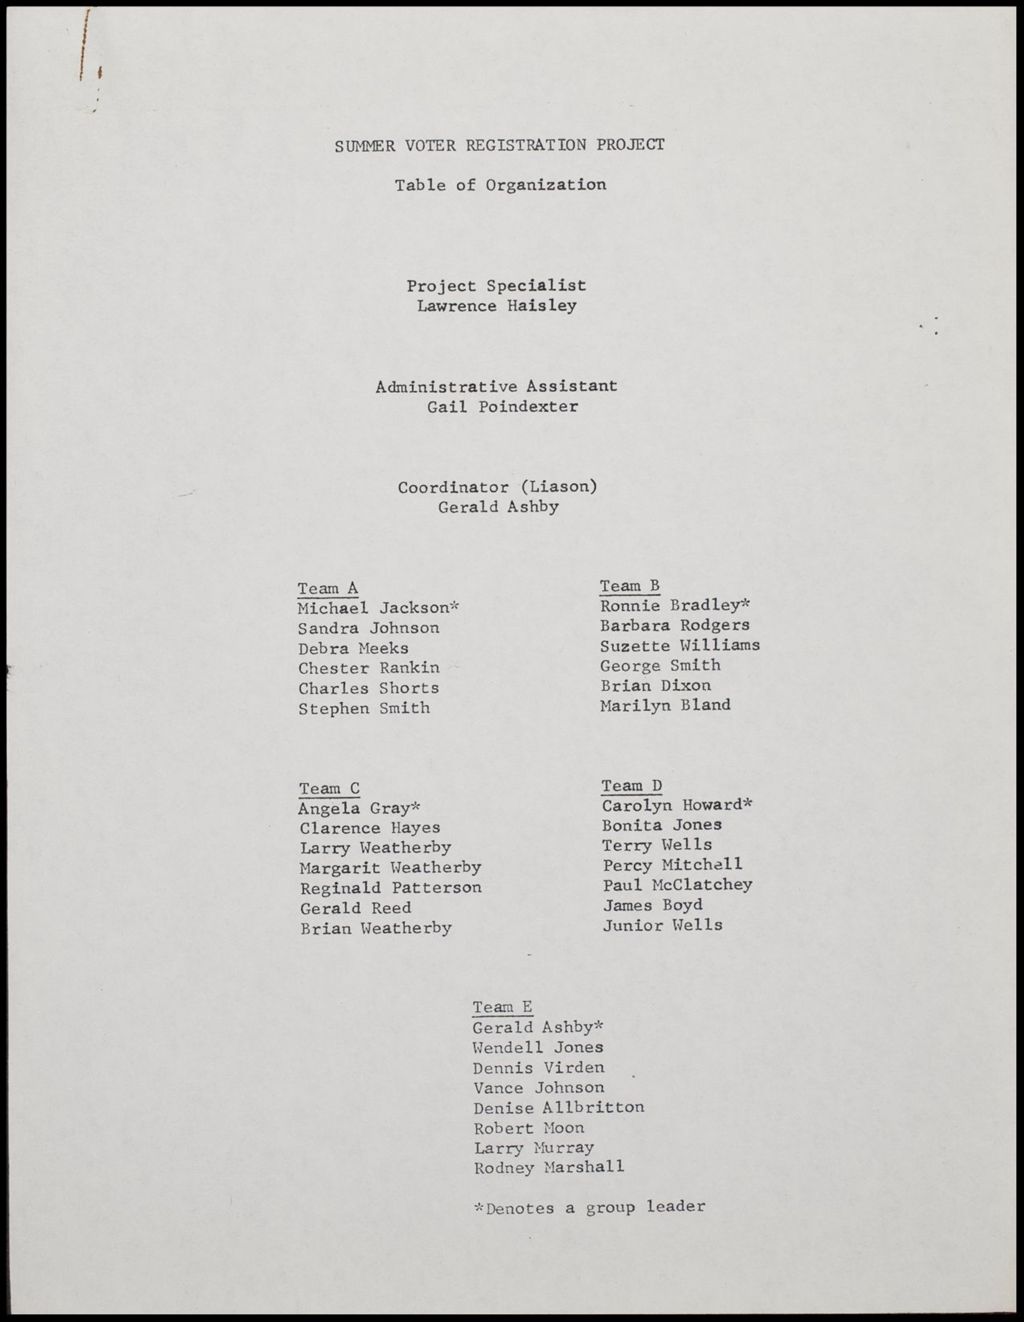 Miniature of Summer Voter Registration Project, 1978 (Folder II-2145)